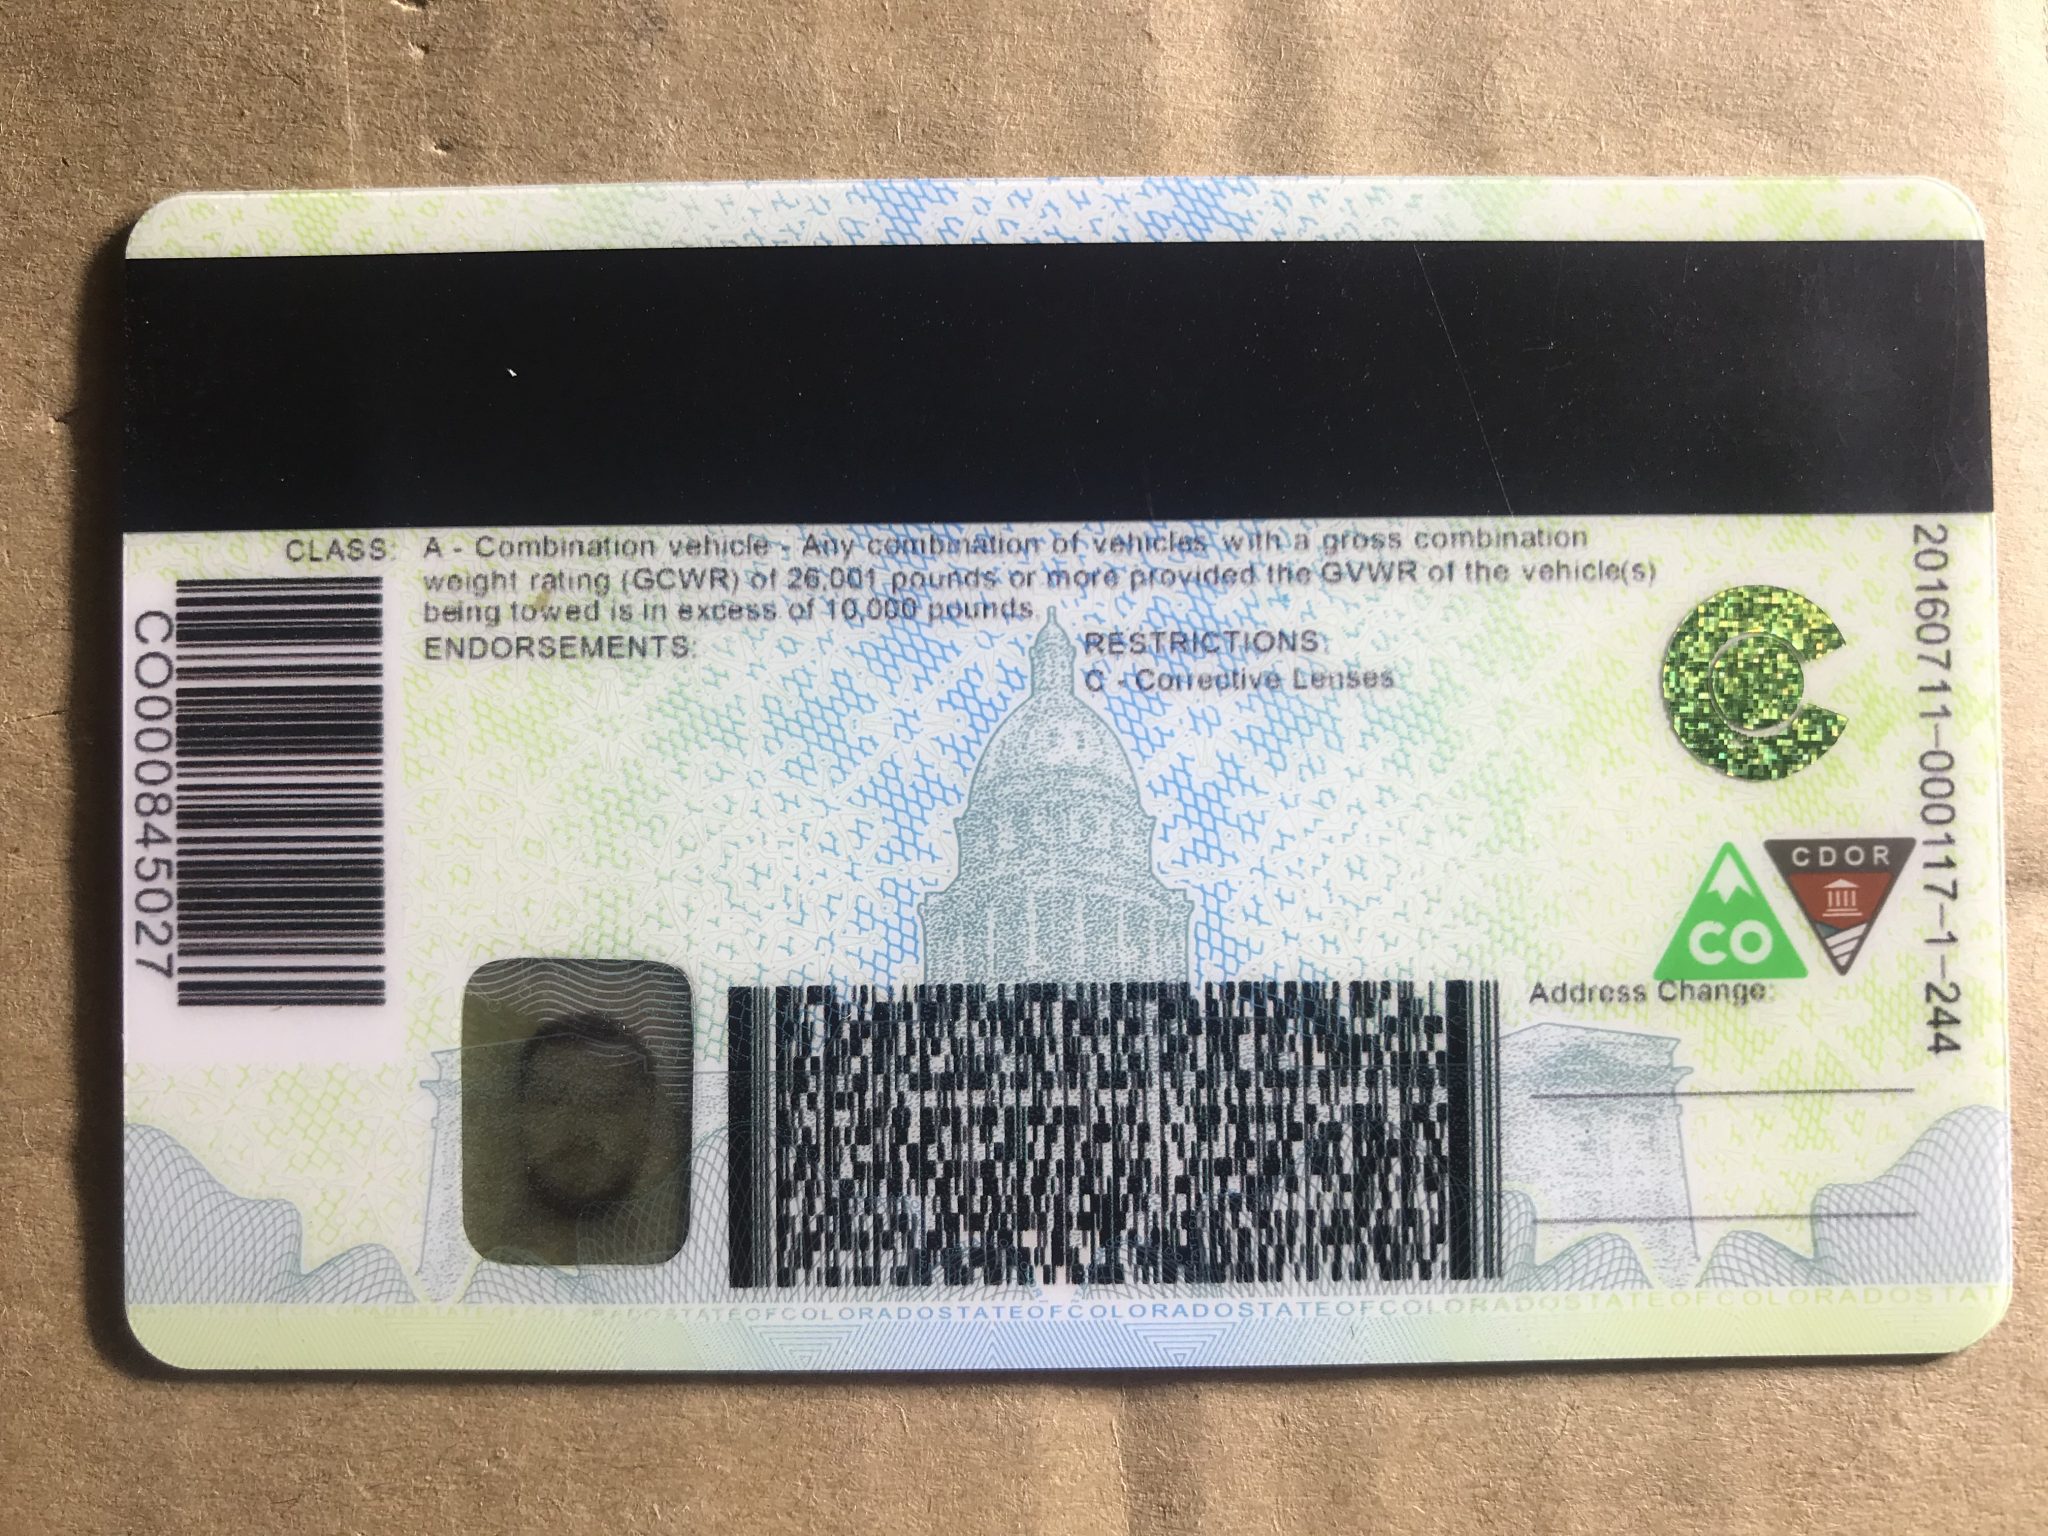 Colorado Fake ID | Buy Scannable Fake IDs | IDTop